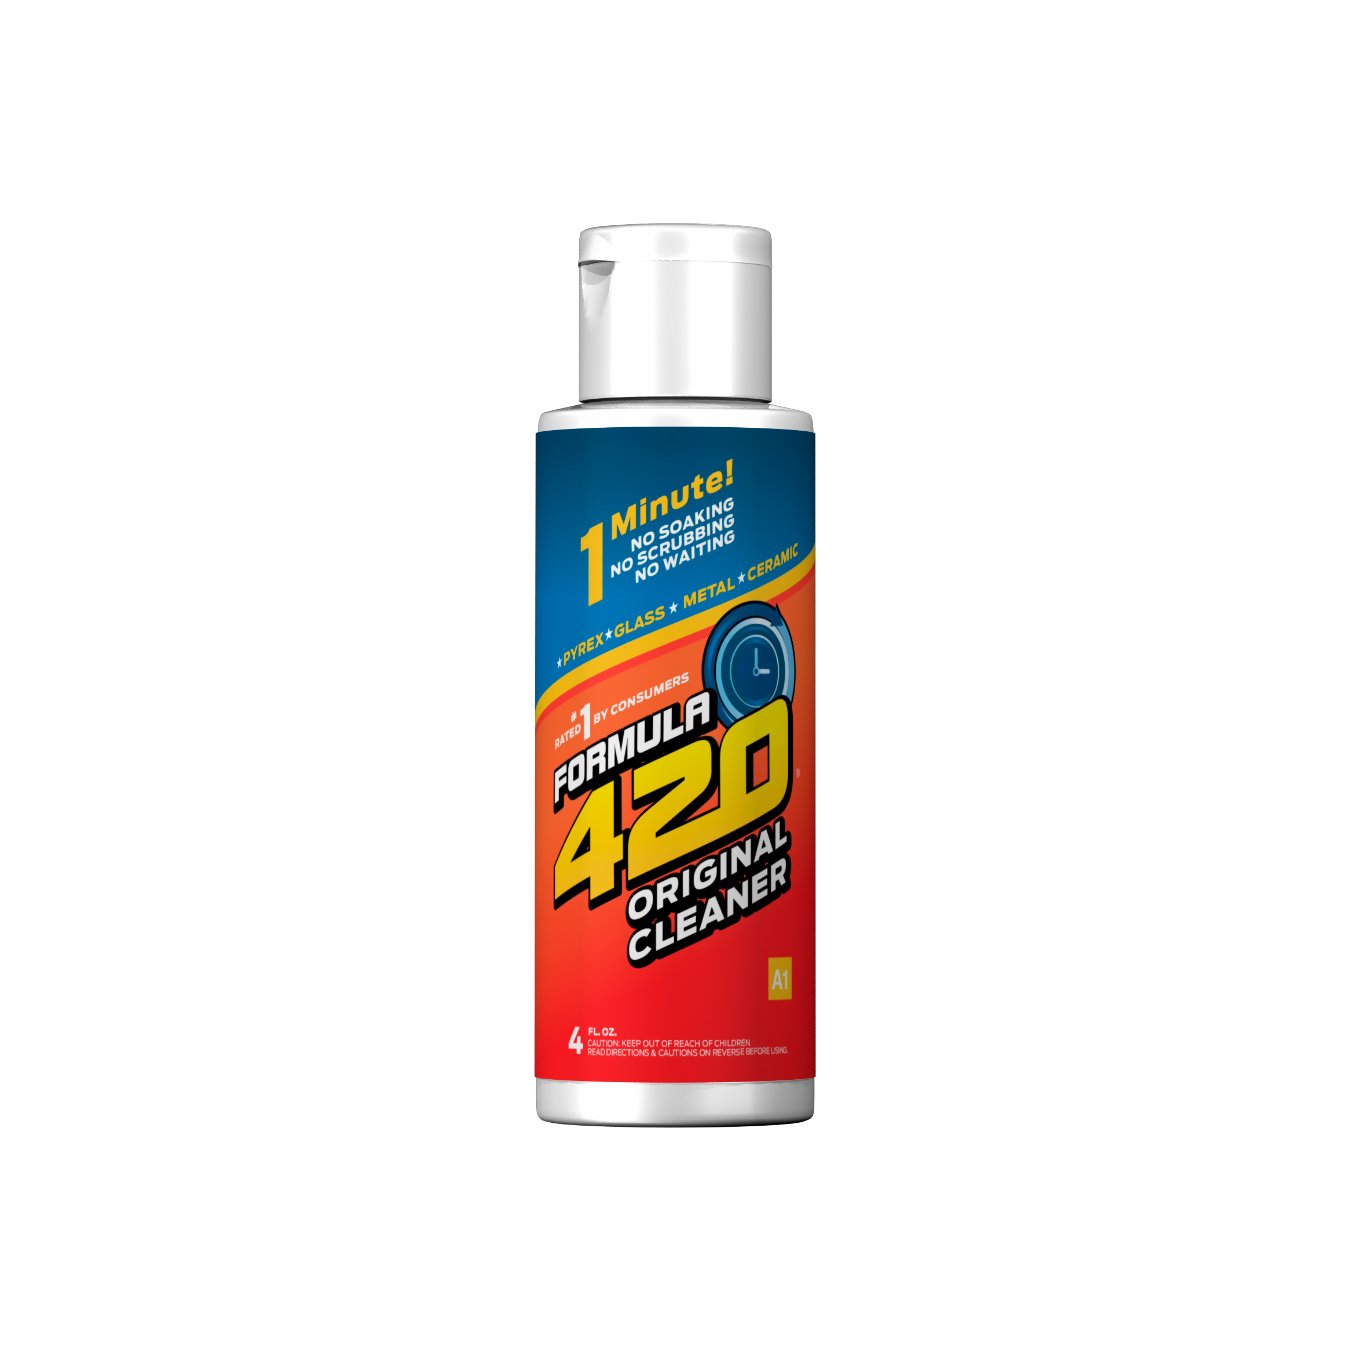 420 Formula Cleaners - [A1] ORIGINAL